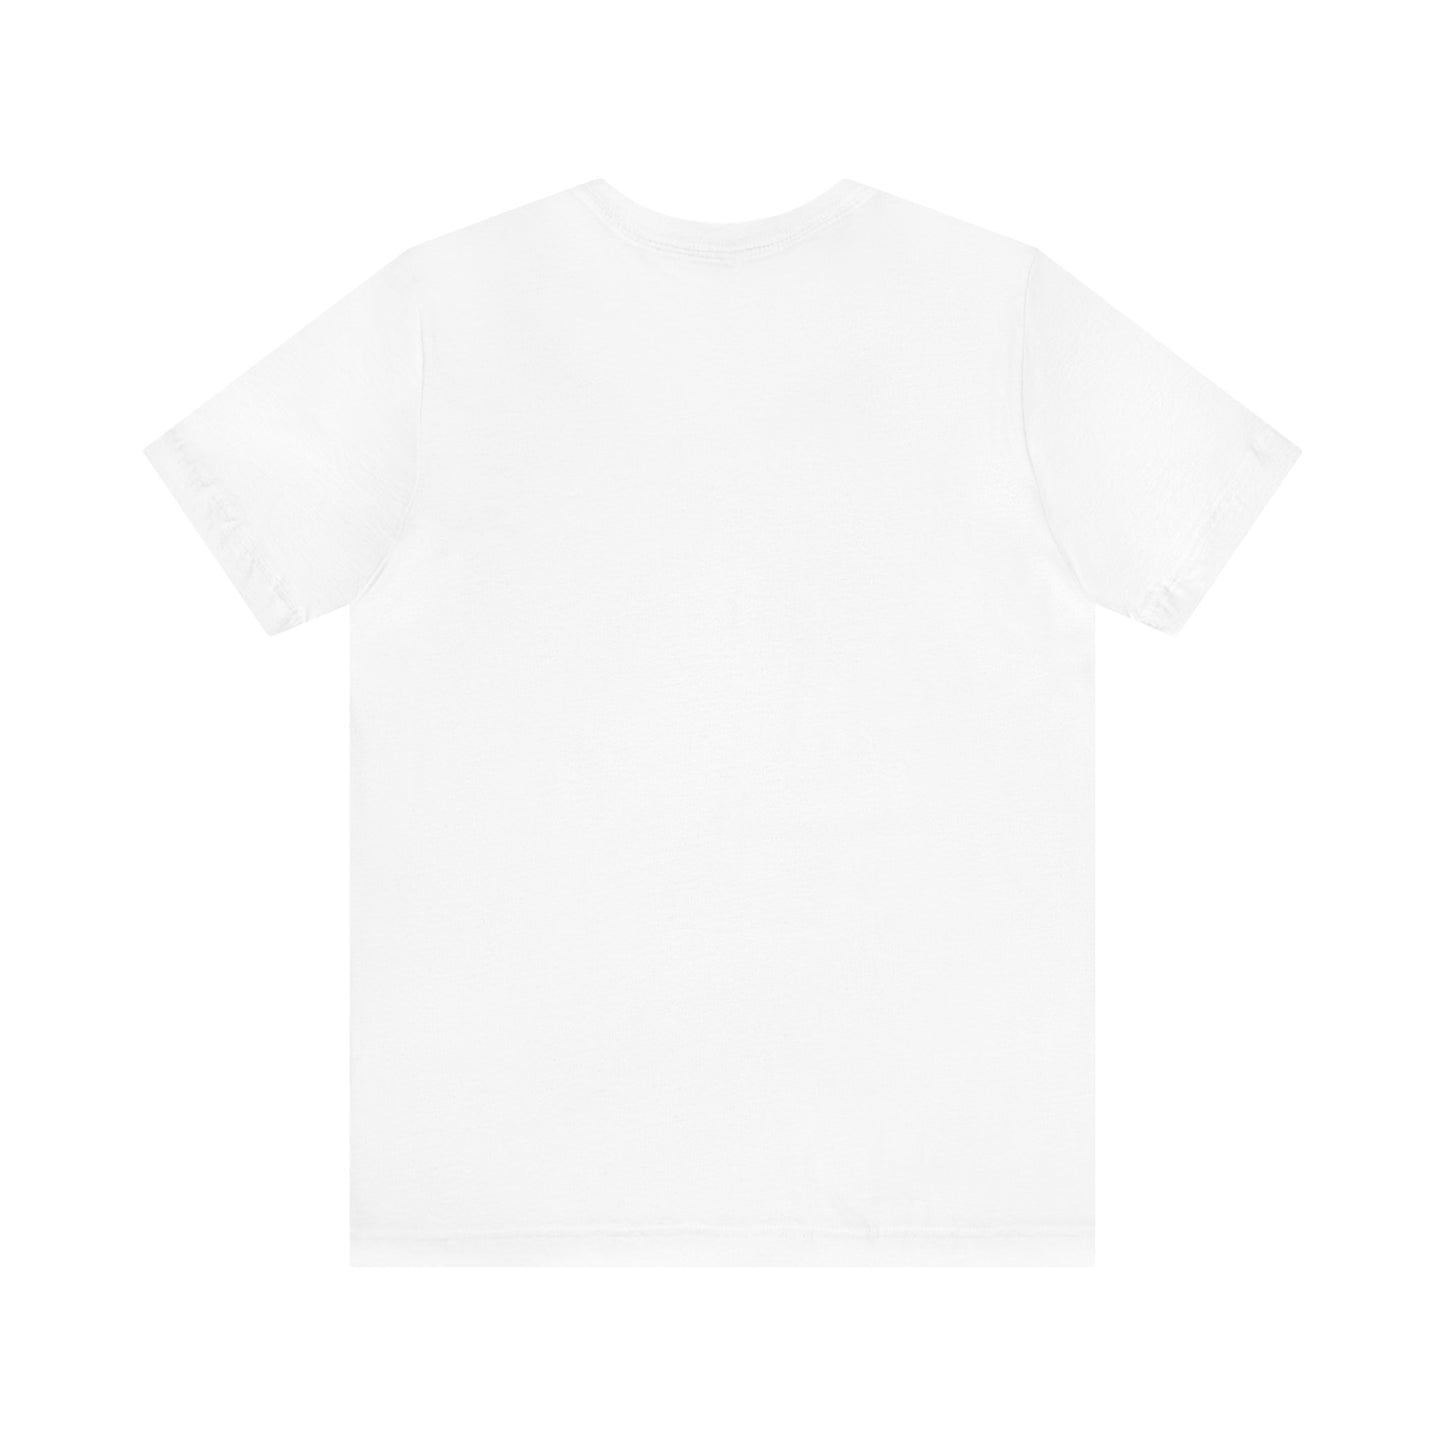 Best Nana Ever Unisex T-shirt with Flower Design, Quality Cotton T-Shirt